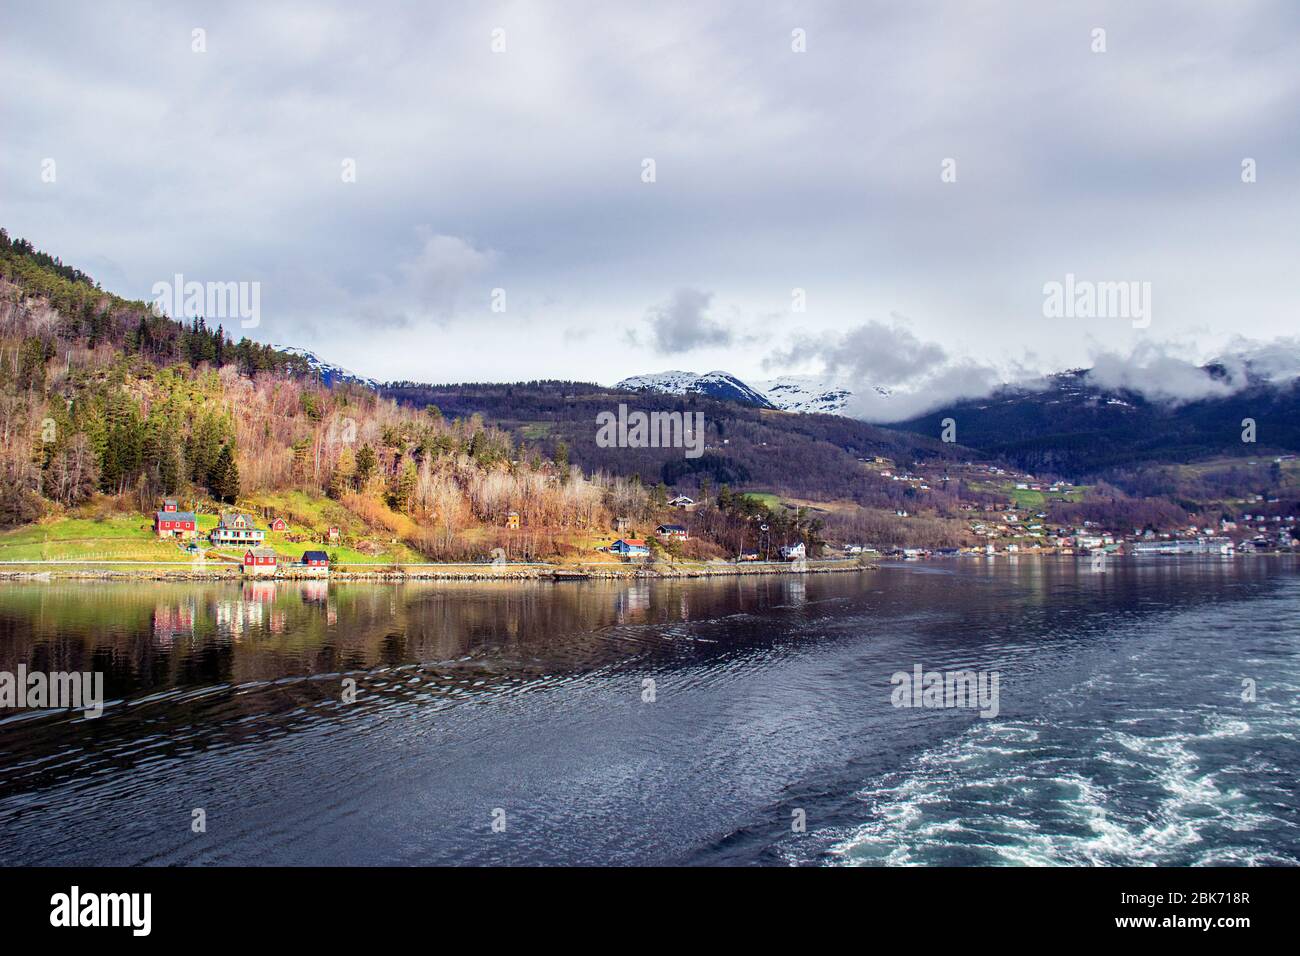 fjords norvégiens béatiful, vie en norvège, paysage norvégien, littoral norvégien Banque D'Images